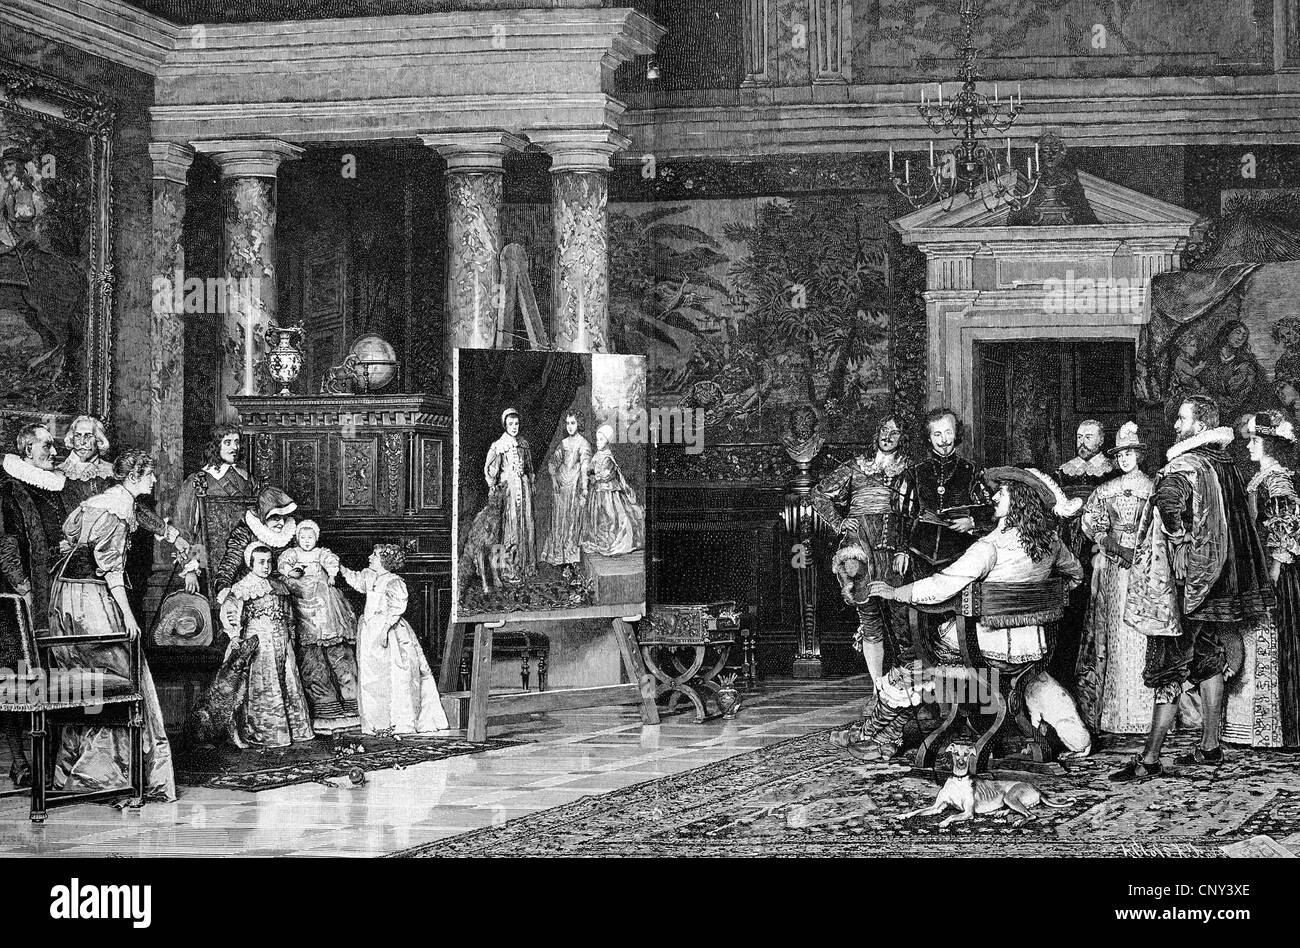 Charles I d'Angleterre dans l'atelier de Van Dyck, illustration historique, woodcut, ca 1888 Banque D'Images